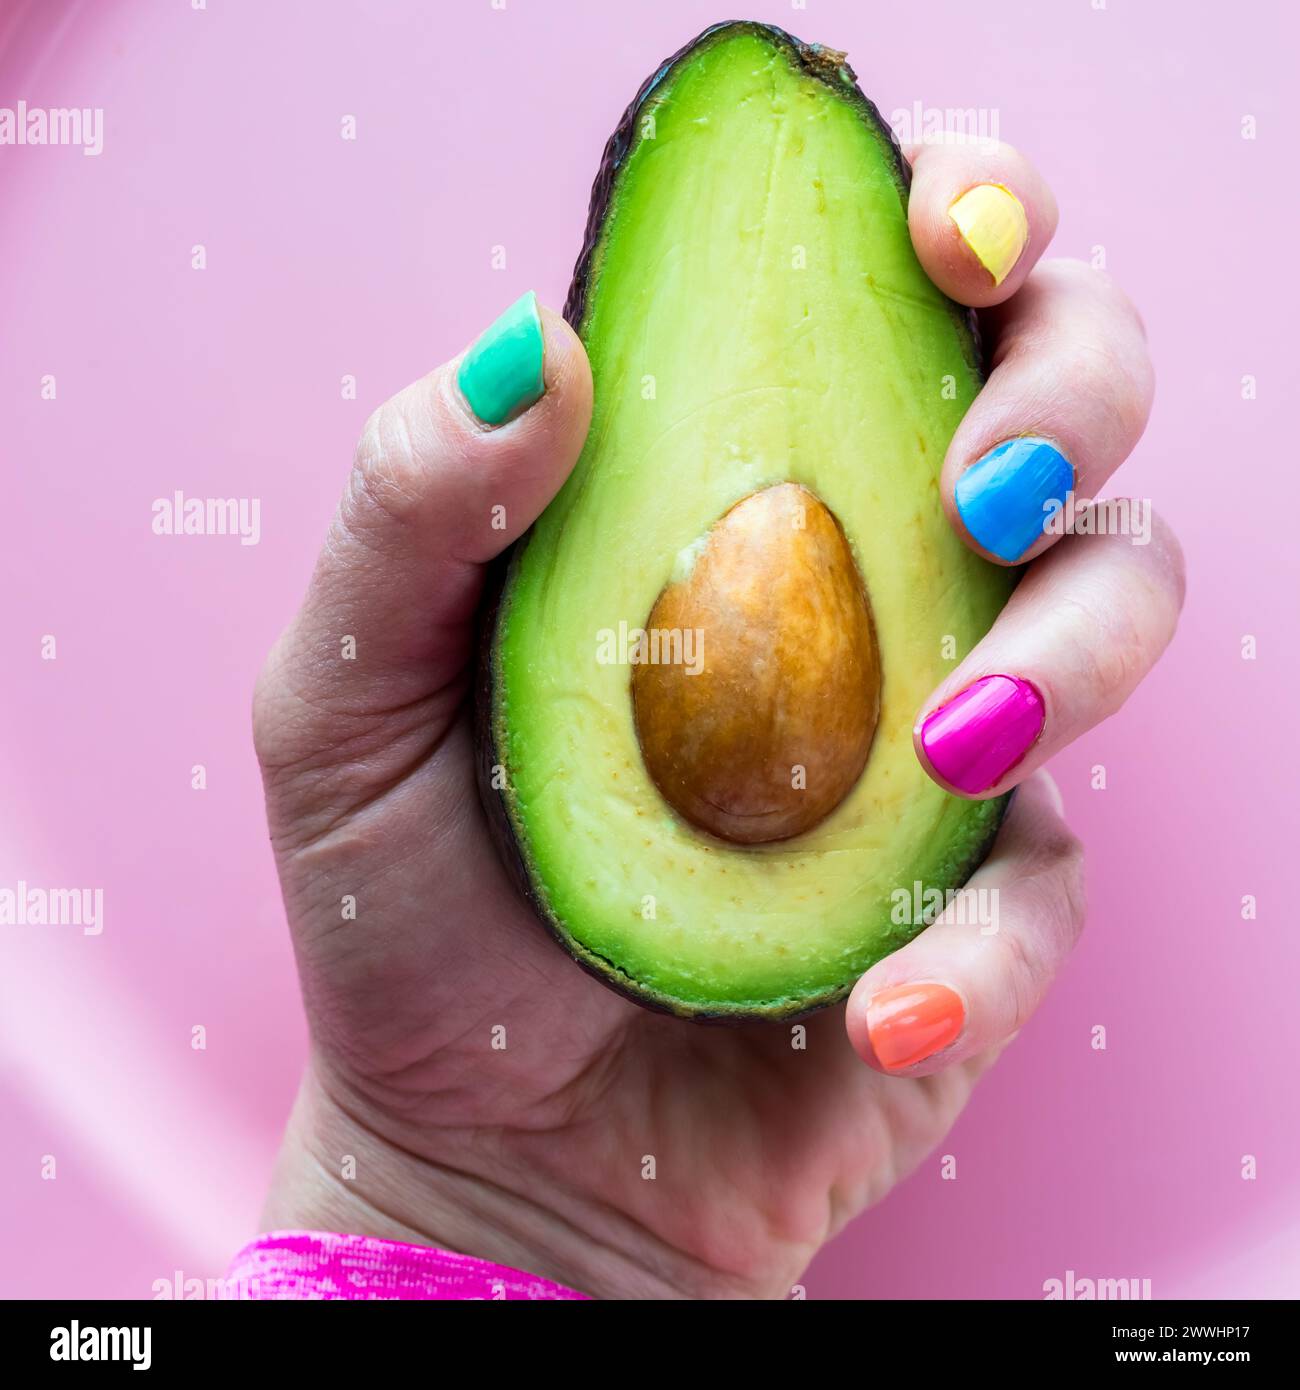 A hand with colourful nail polish holding a freshly cut avocado half. Stock Photo